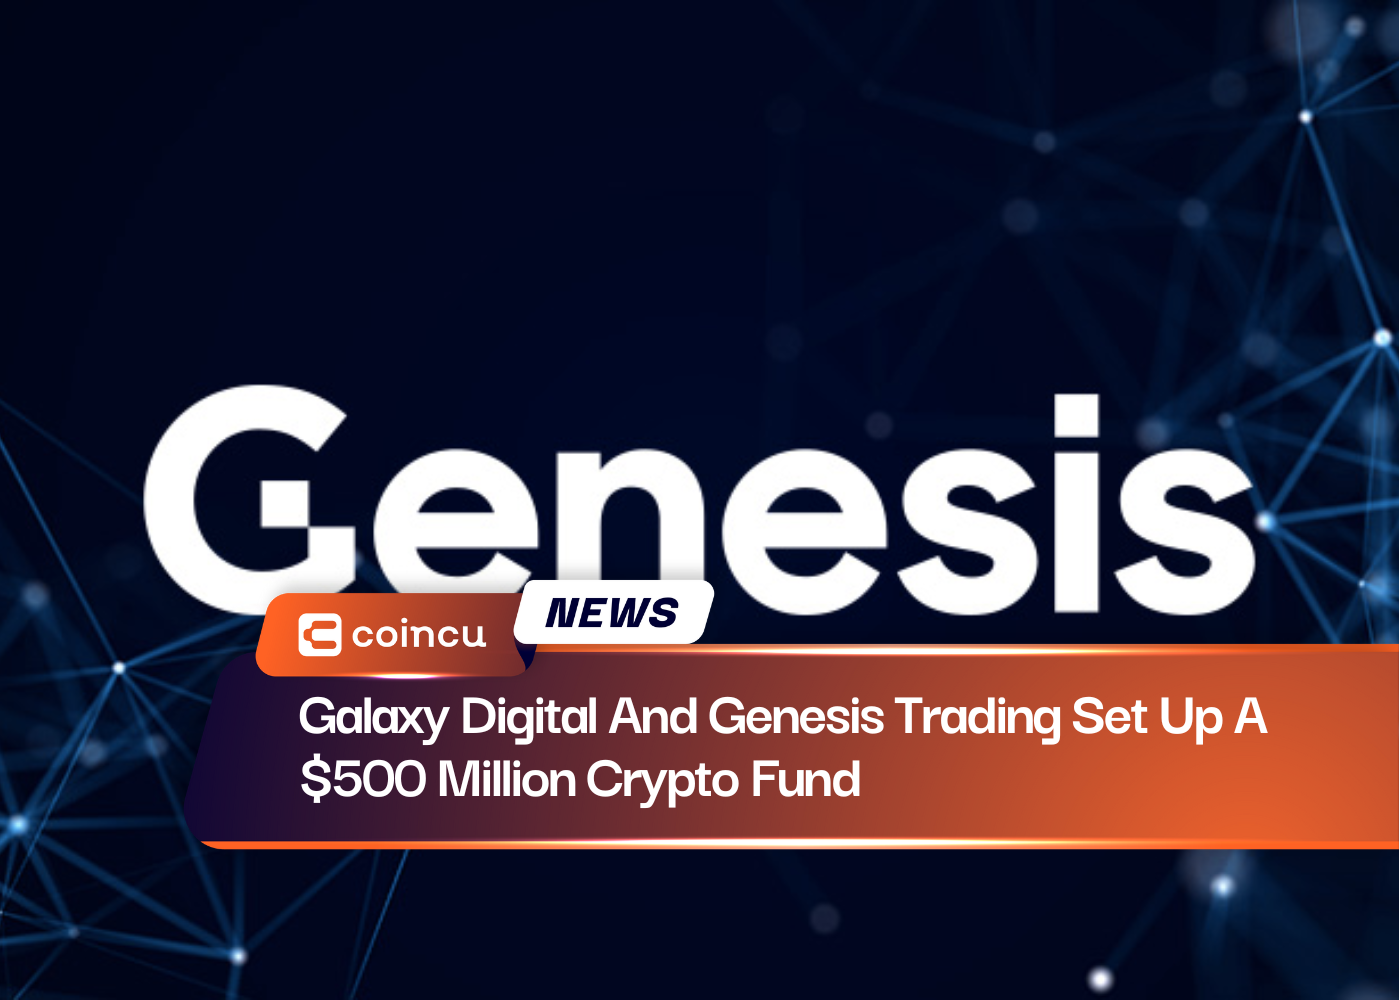 Galaxy Digital And Genesis Trading Set Up A $500 Million Crypto Fund